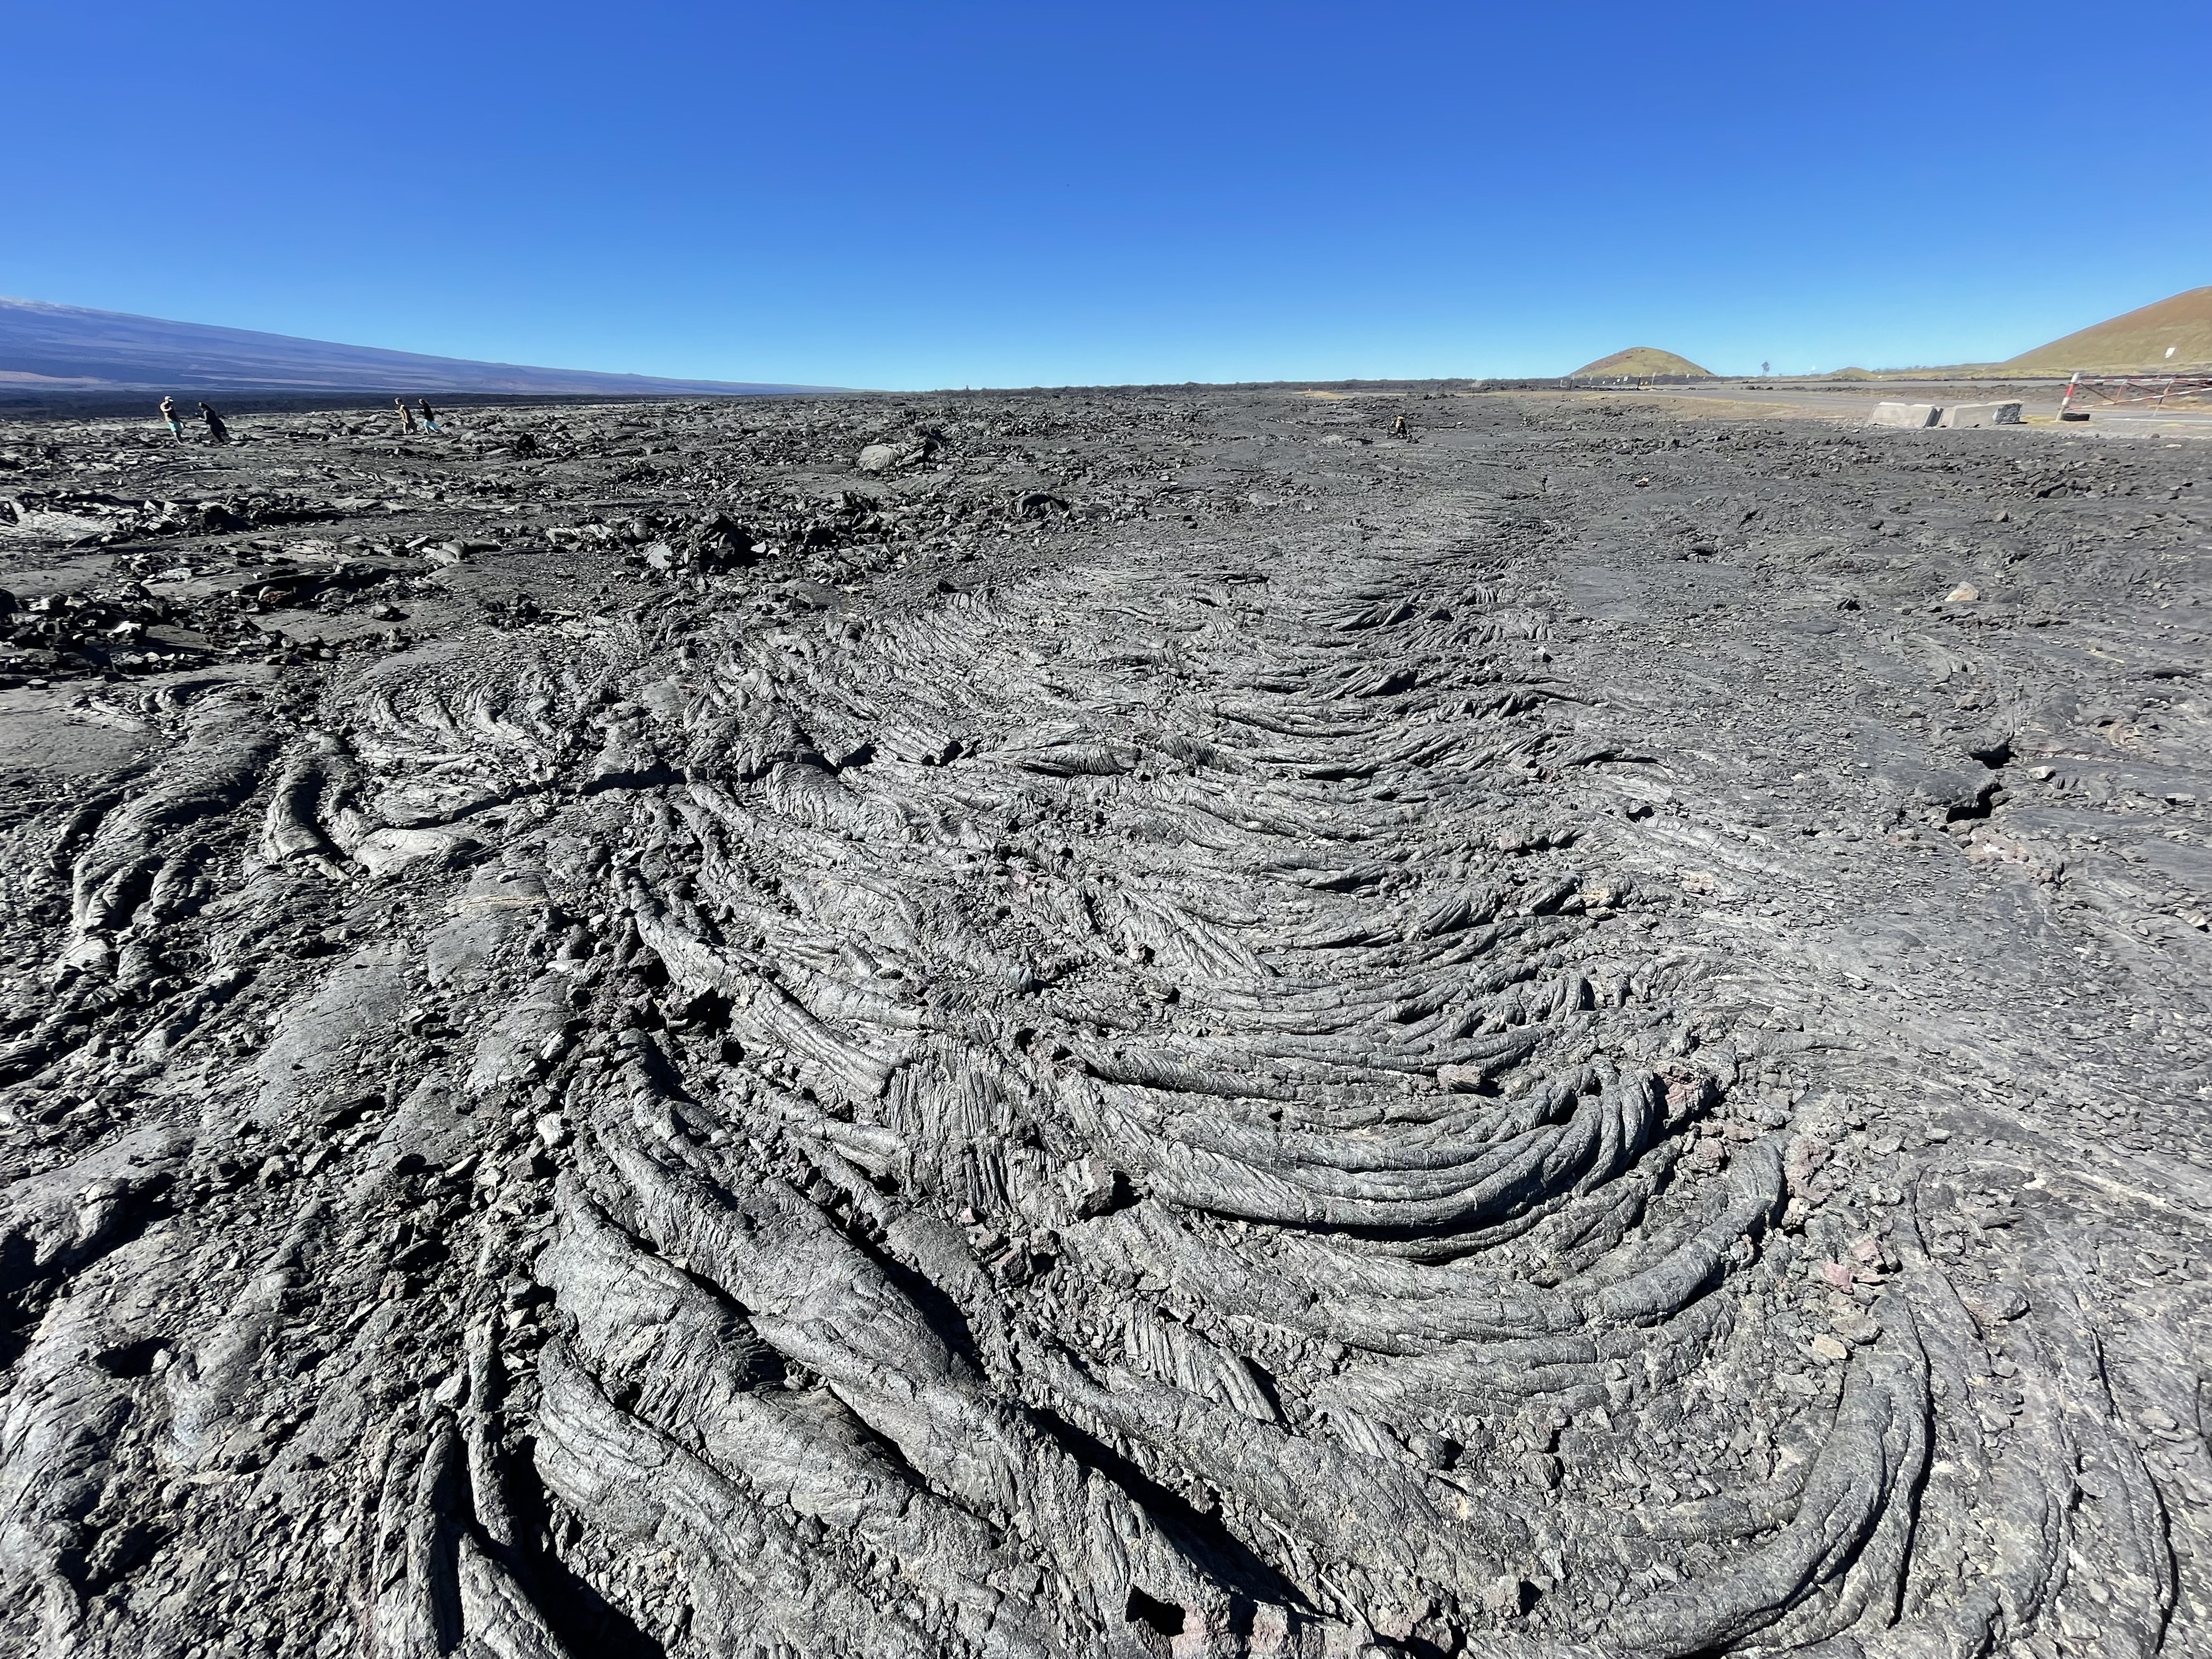 Volcanic terrain along Saddle Road